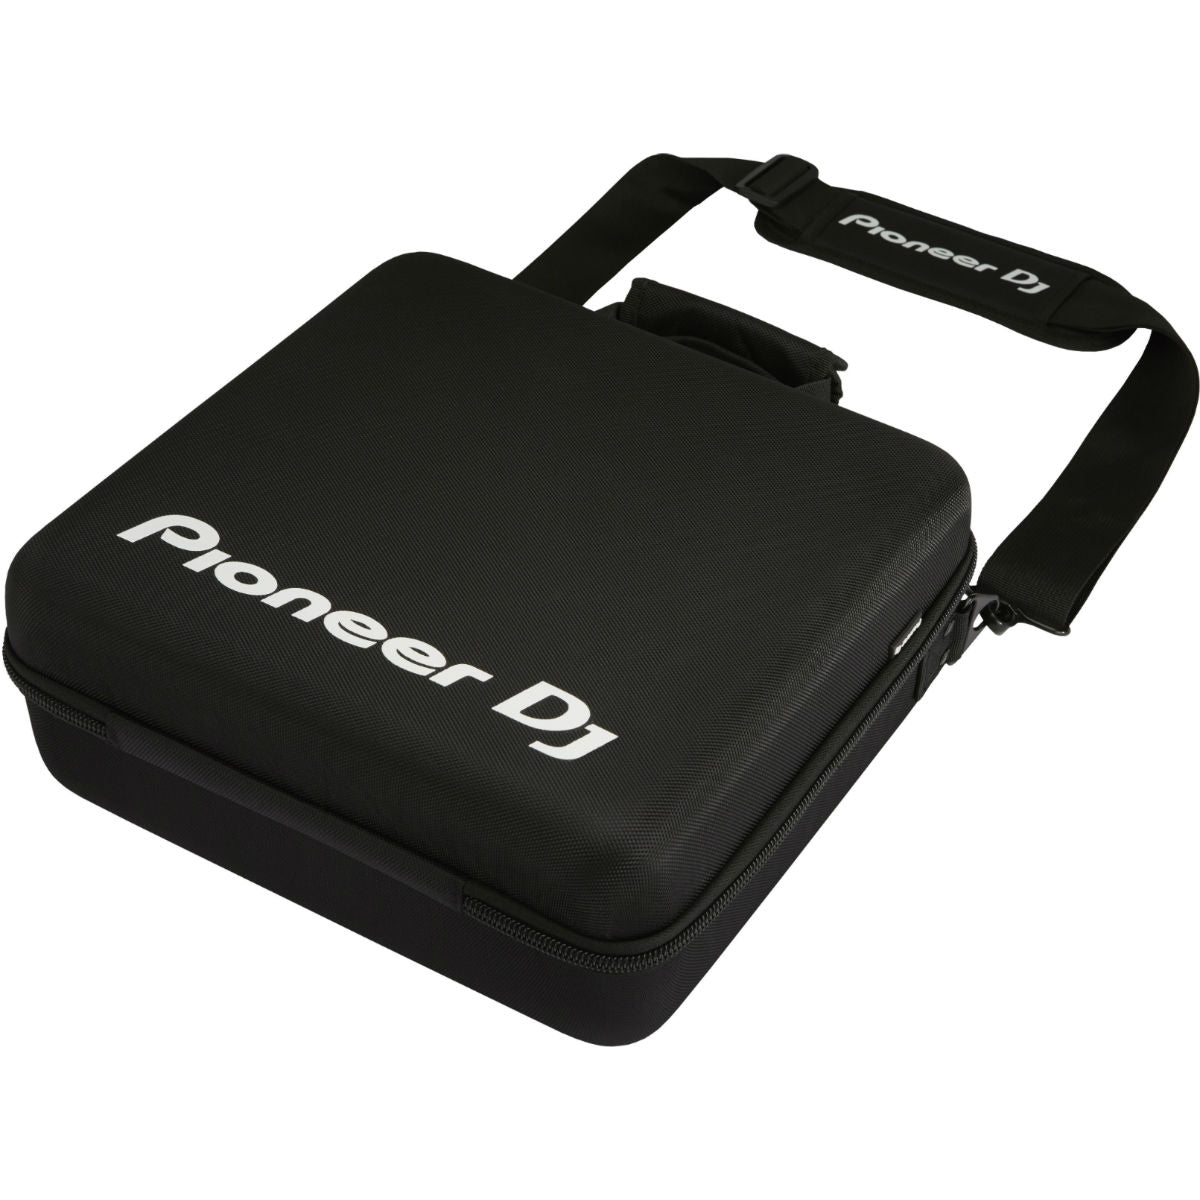 Pioneer DJ DJC-700 Bag for XDJ-700 player